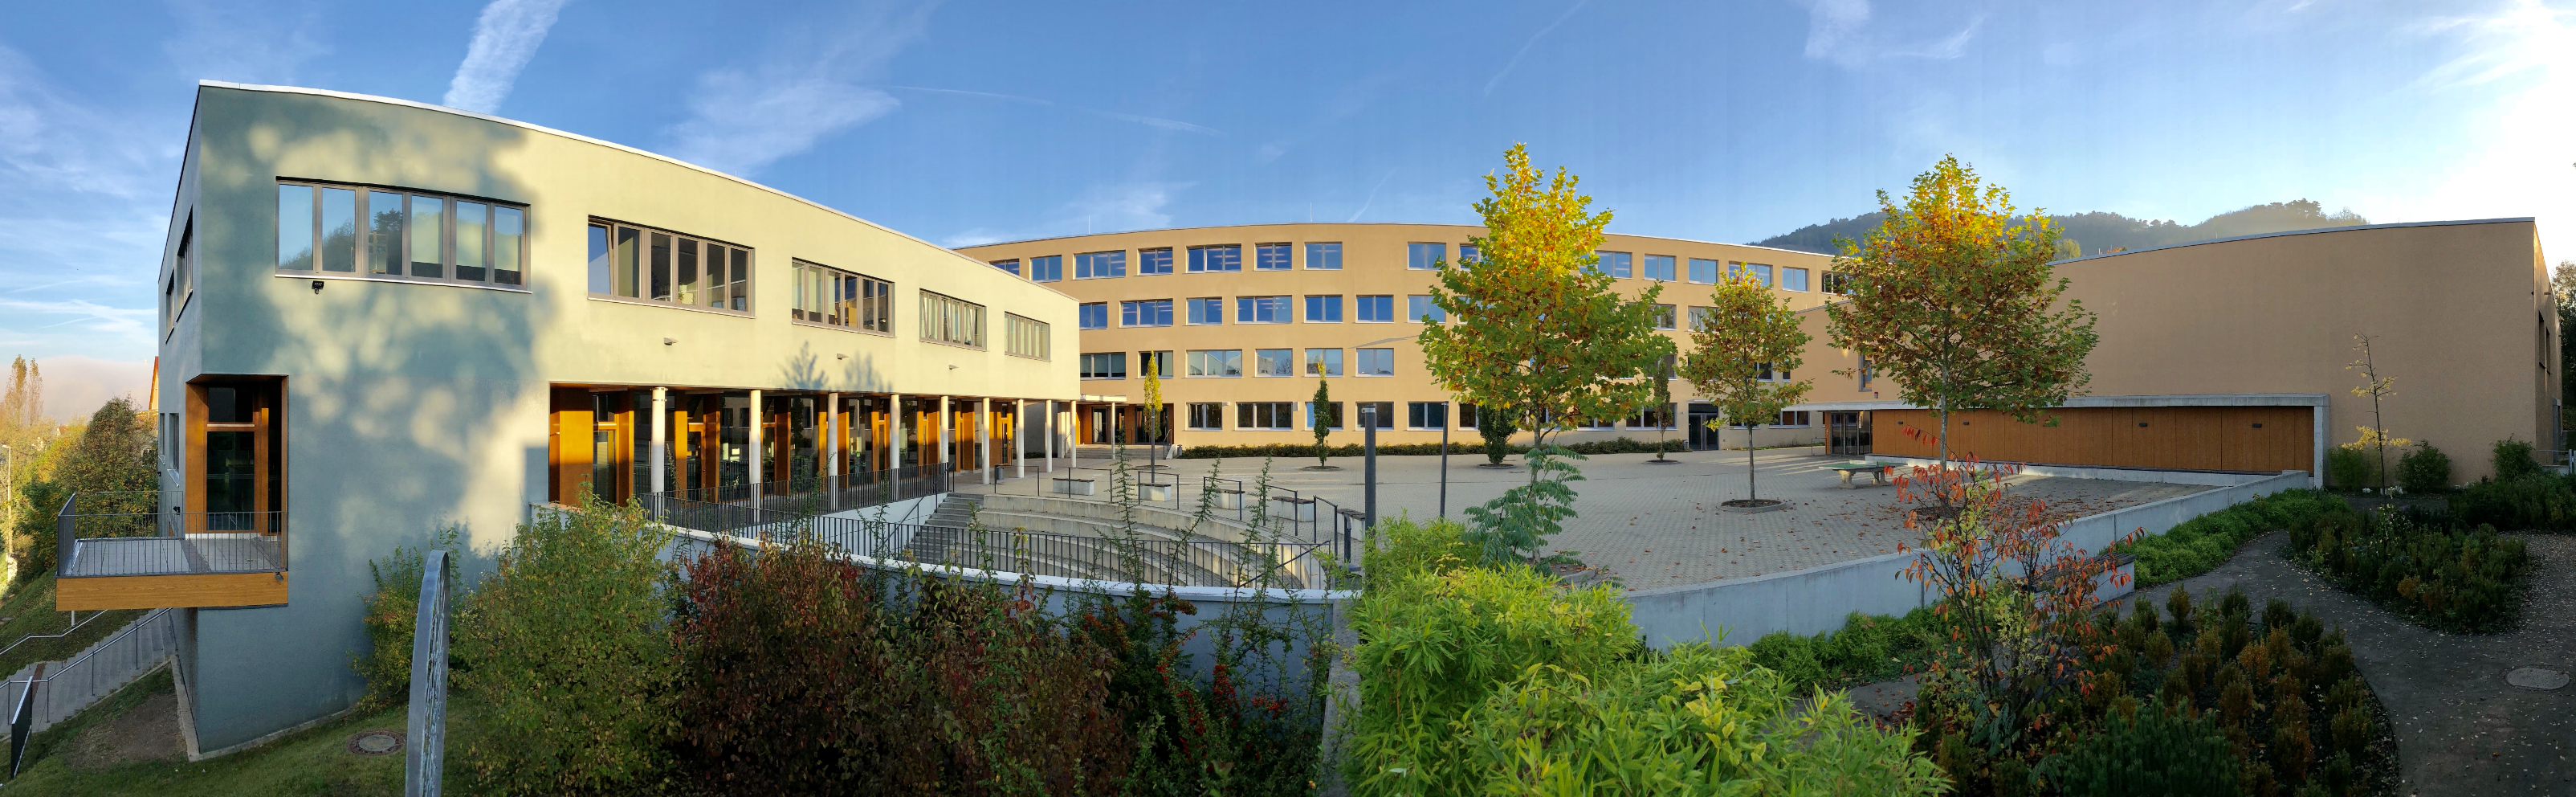 Lobdeburgschule Jena